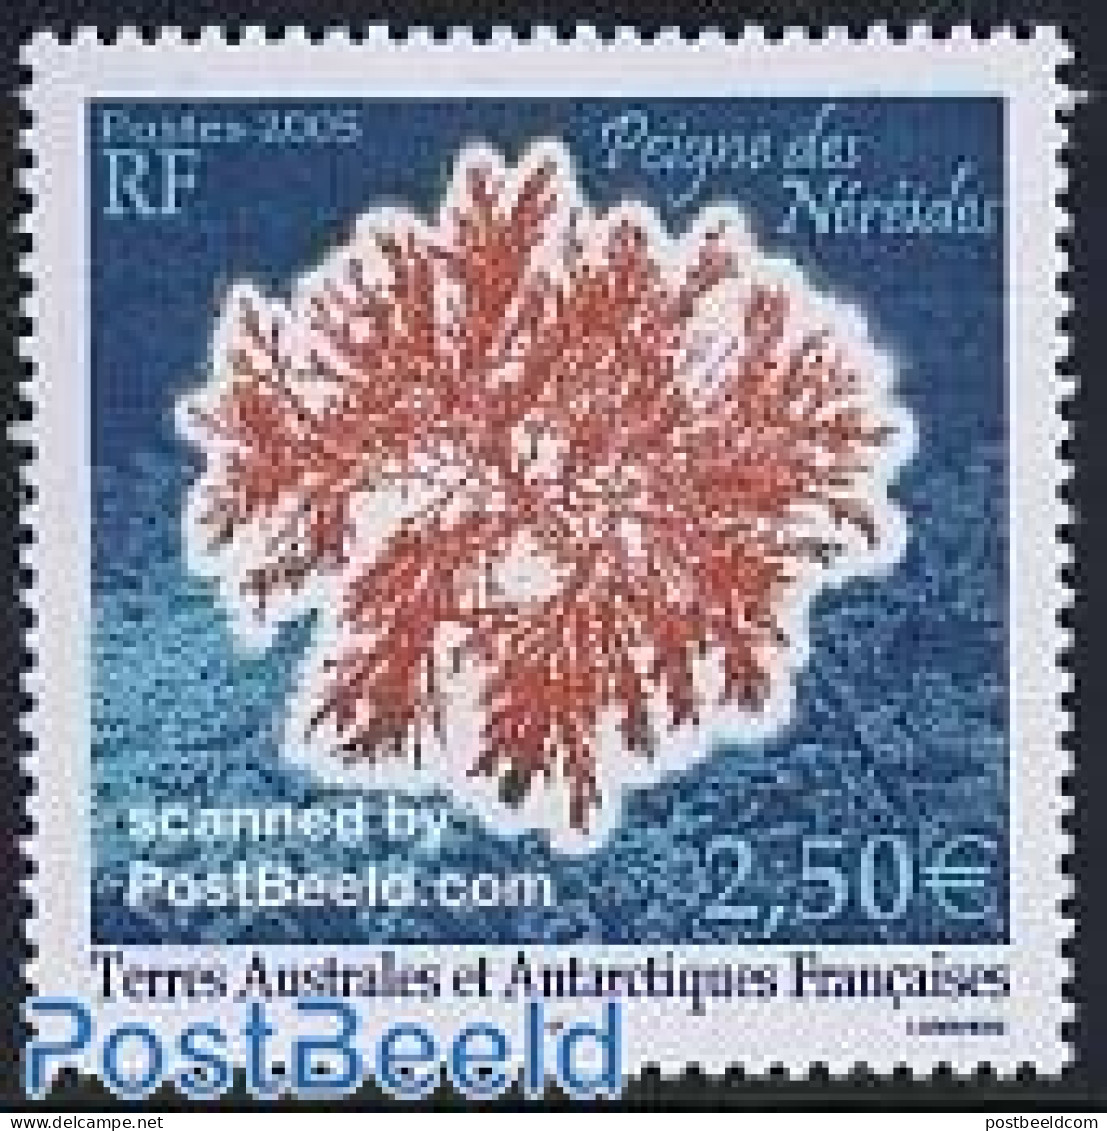 French Antarctic Territory 2005 Corals, Peigne Des Nereides 1v, Mint NH, Nature - Neufs